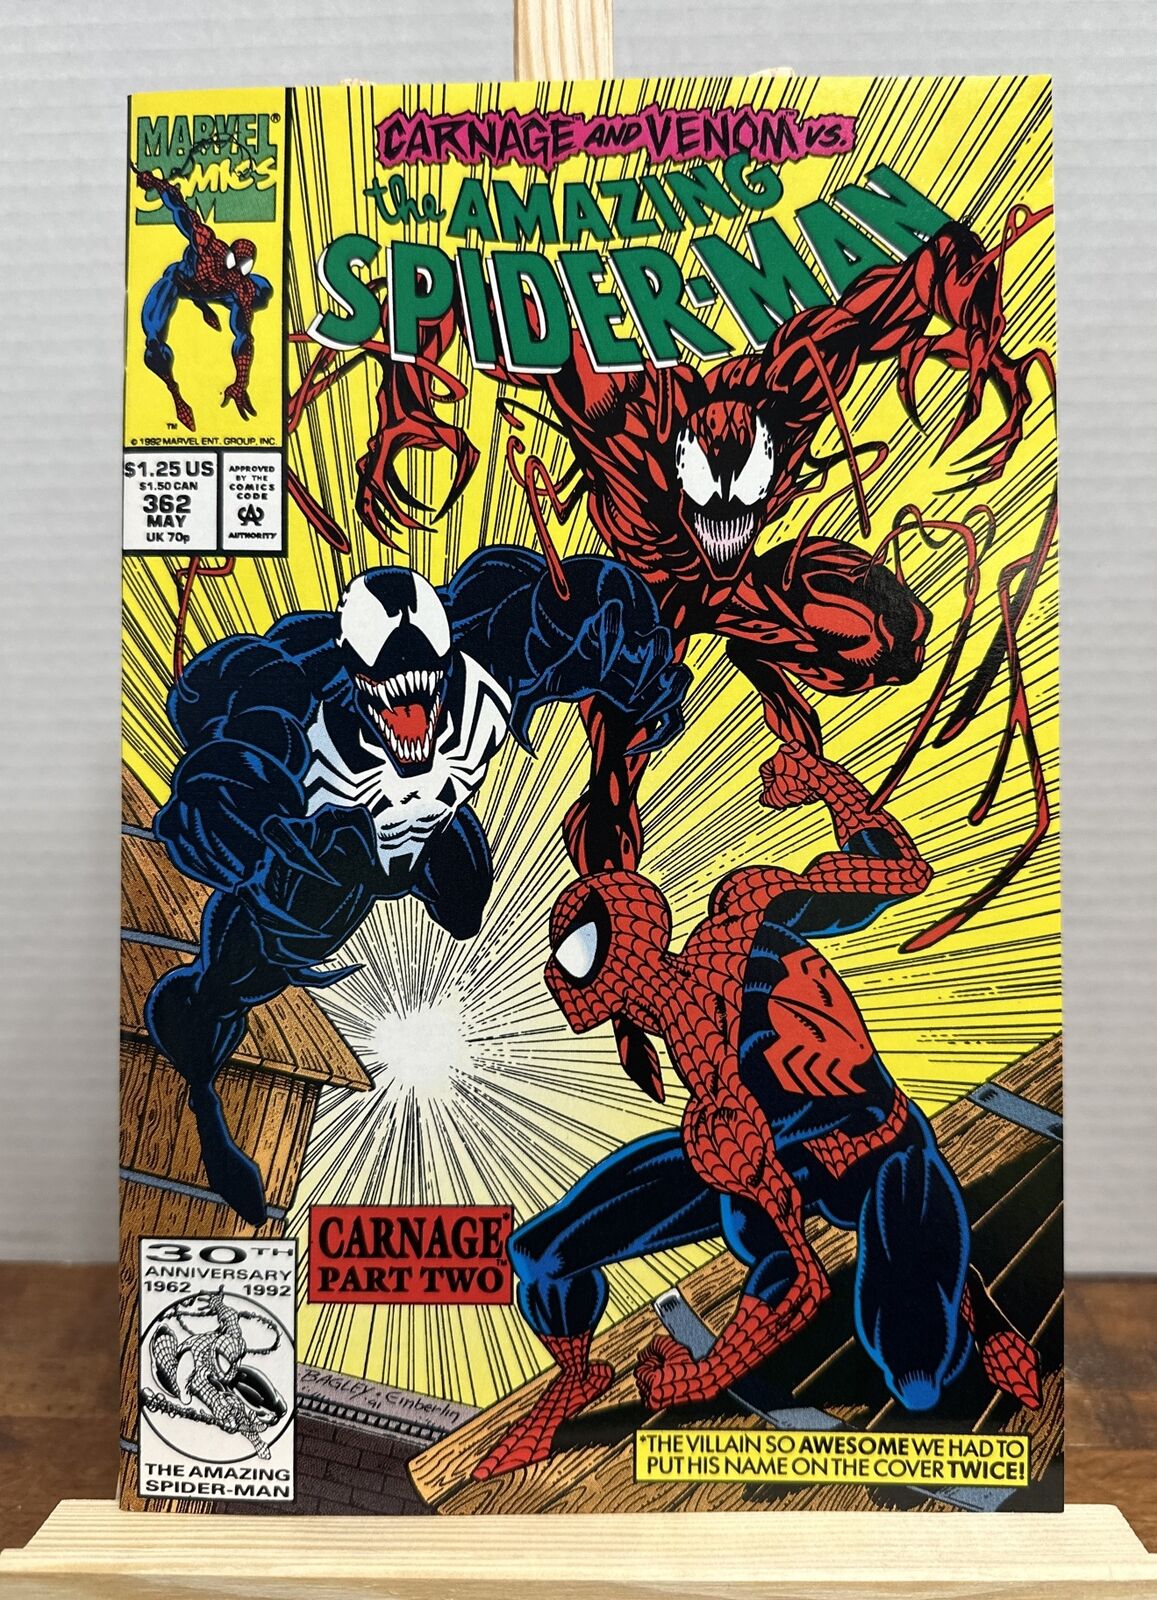 The Amazing Spider-Man #362 Marvel 1992 Carnage and Venom vs Spider-Man